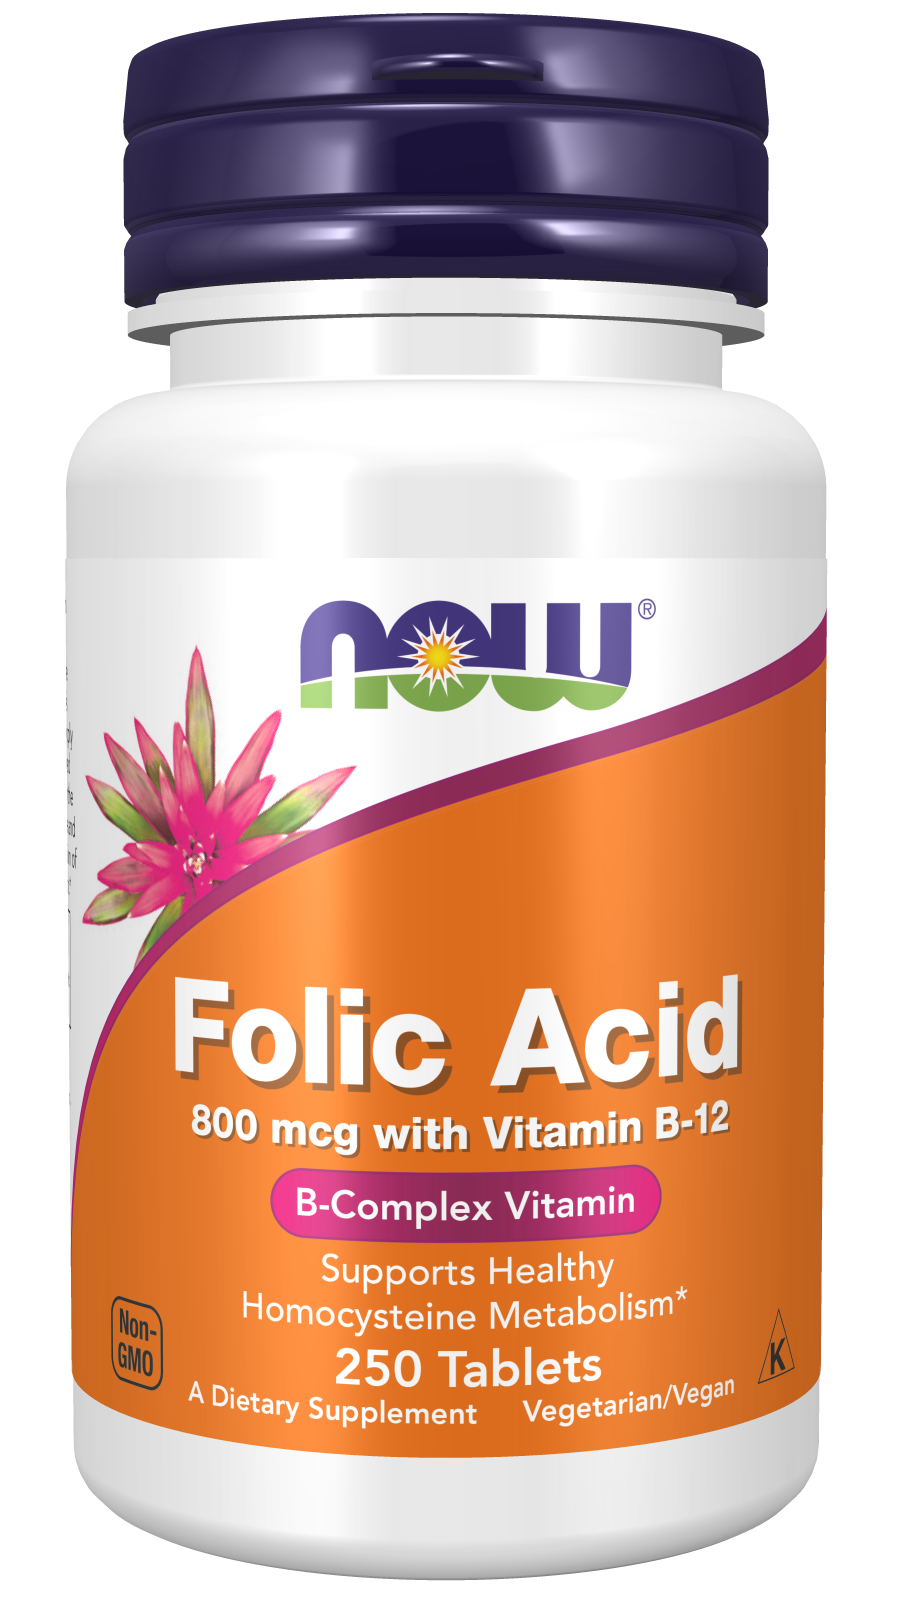 Folic Acid 800 mcg with Vitamin B-12 - 250 Tablets bottle front